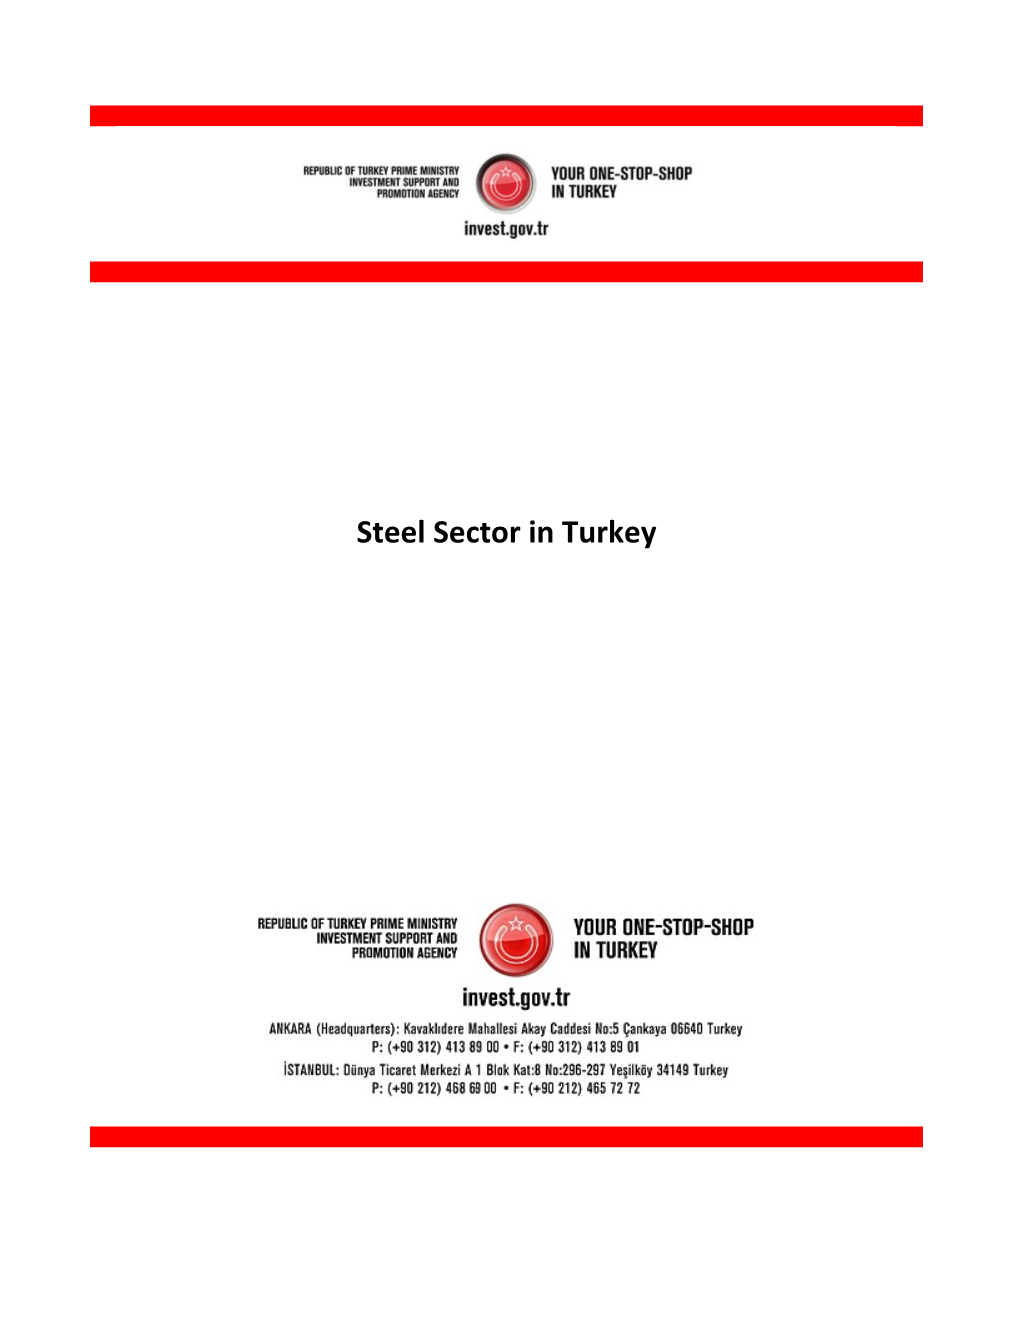 Source: Turkish Iron & Steel Producers Association (